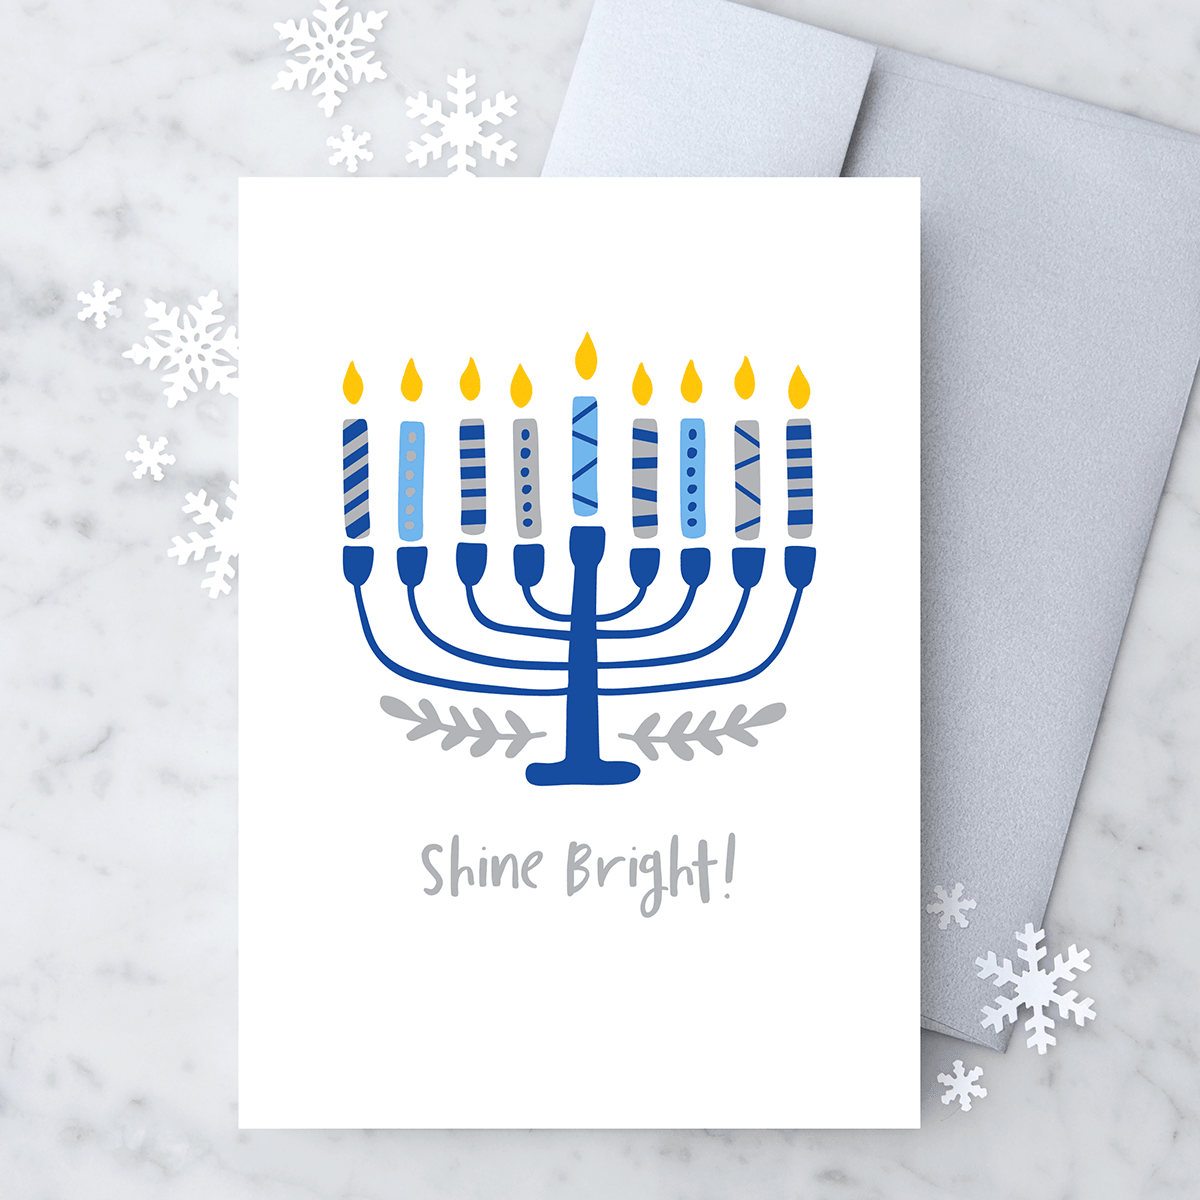 Shine Bright! - Hanukkah Greeting Card - Thirty Six Knots - thirtysixknots.com